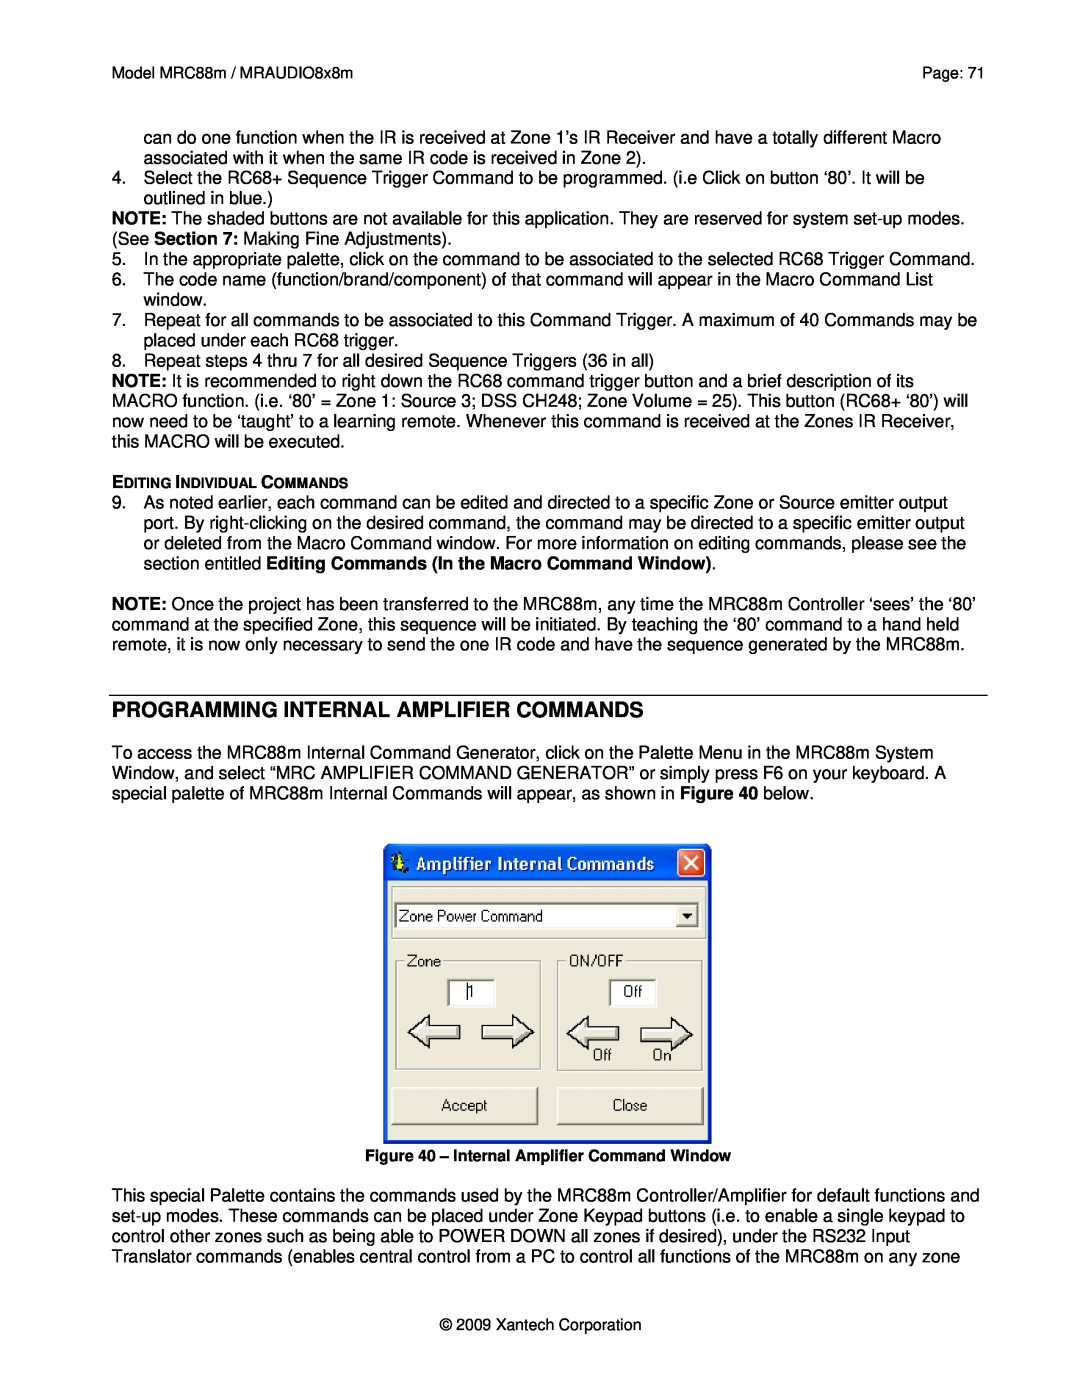 Xantech MRAUDIO8X8M, MRC88M installation instructions Programming Internal Amplifier Commands 